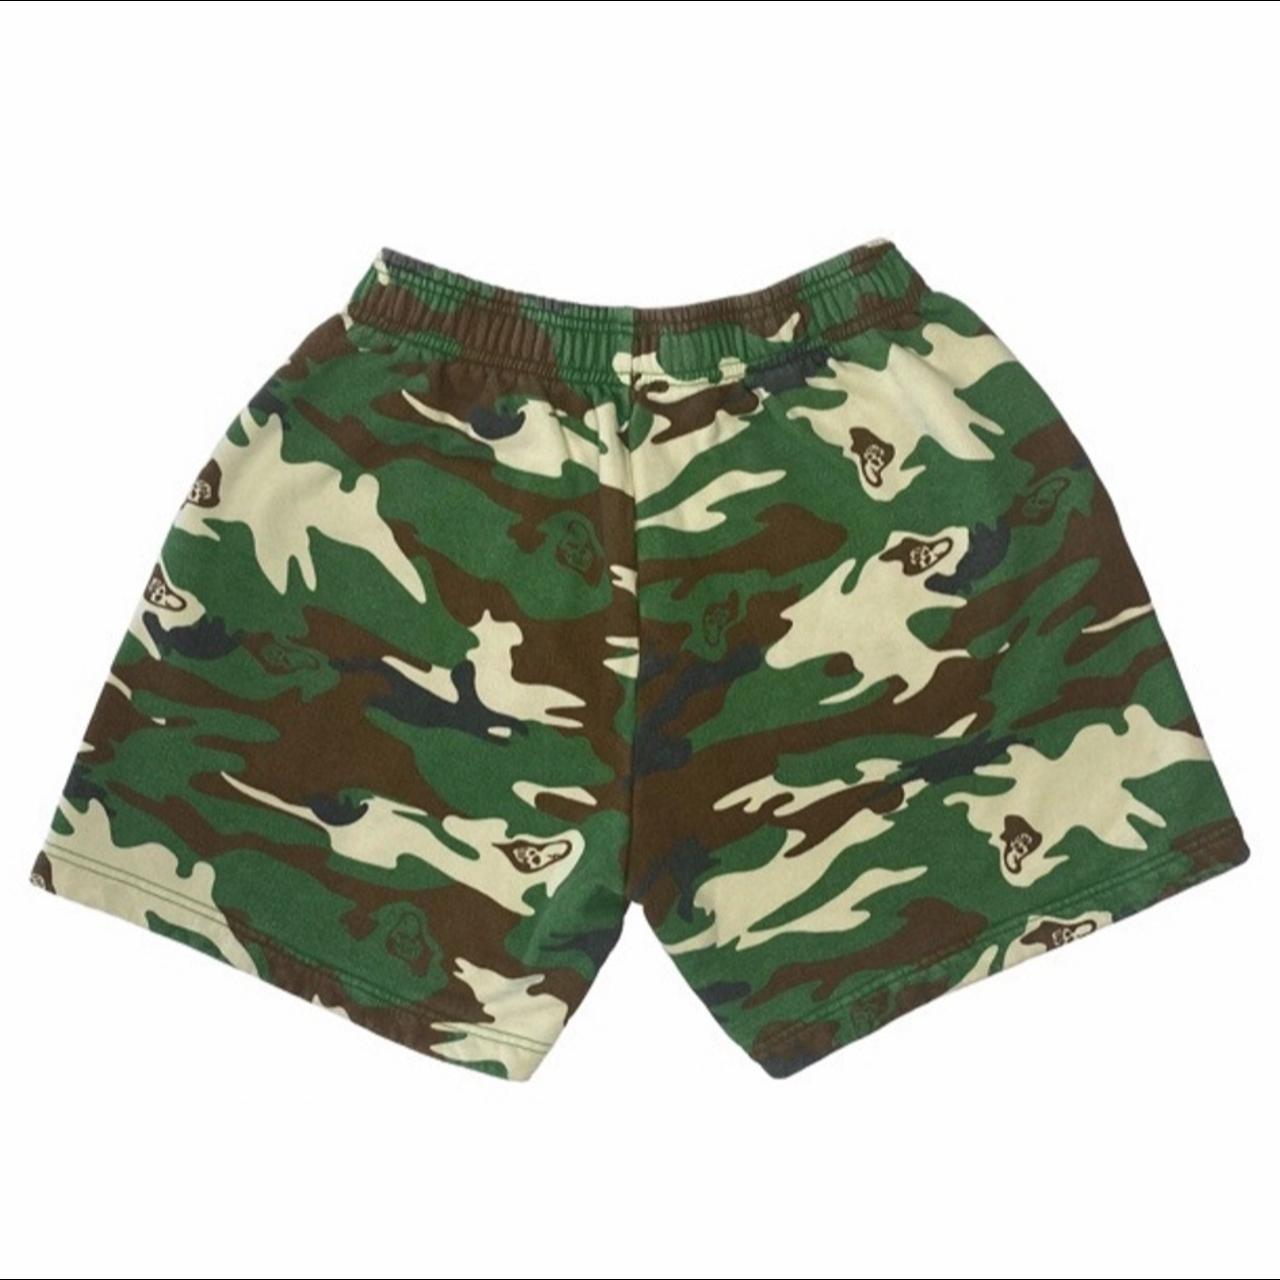 Warren Lotas Camouflage Print Jogger Shorts - Green, 14.5 Rise Shorts,  Clothing - WZPOA20271